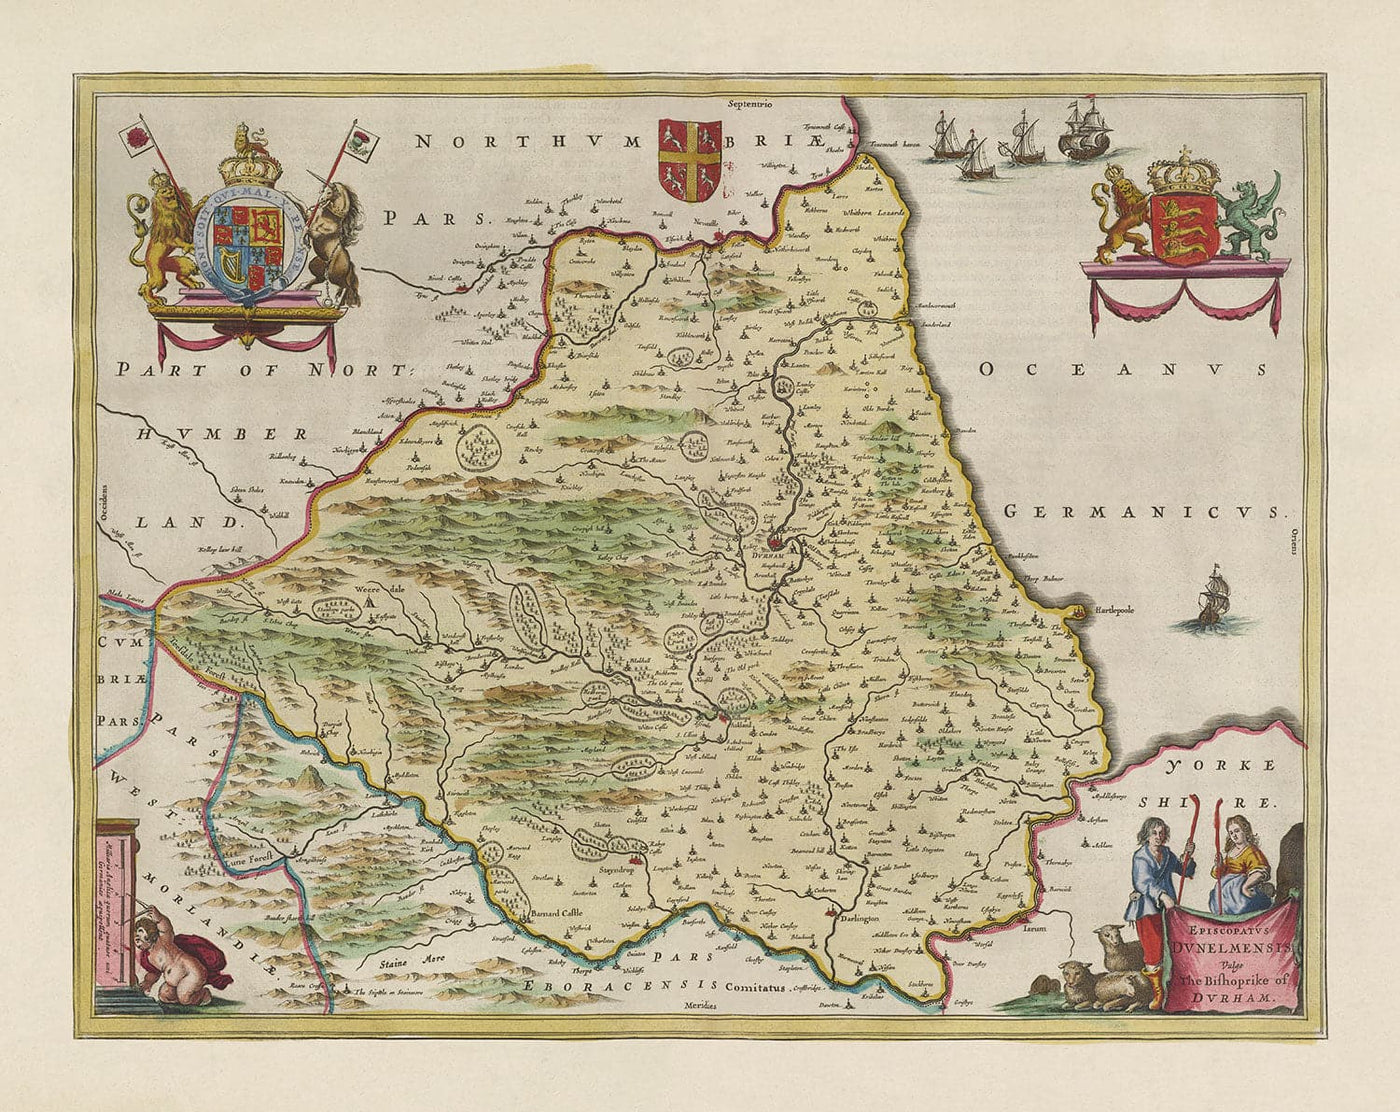 Mapa antiguo del condado Durham, 1665 de Joan Blaeu - Darlington, Stockton-on-Tees, Sunderland, Hartlepool, Newcastle, Gateshead